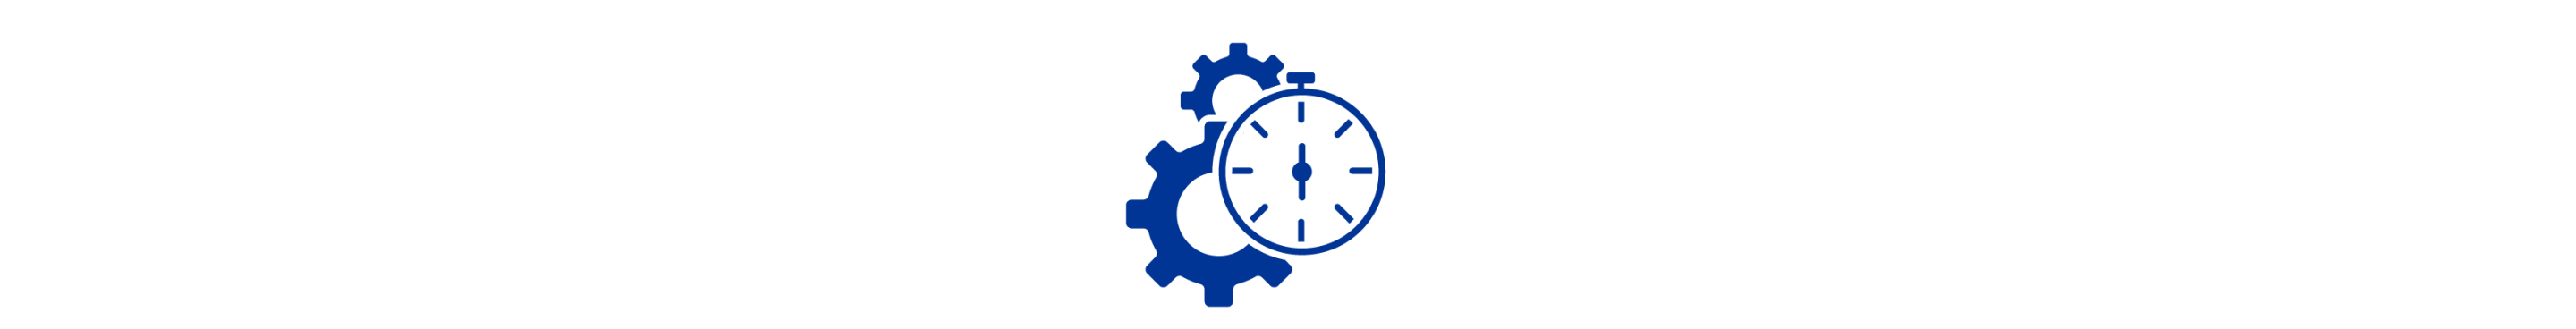 Icono azul de dos engranajes detrás de un cronómetro.